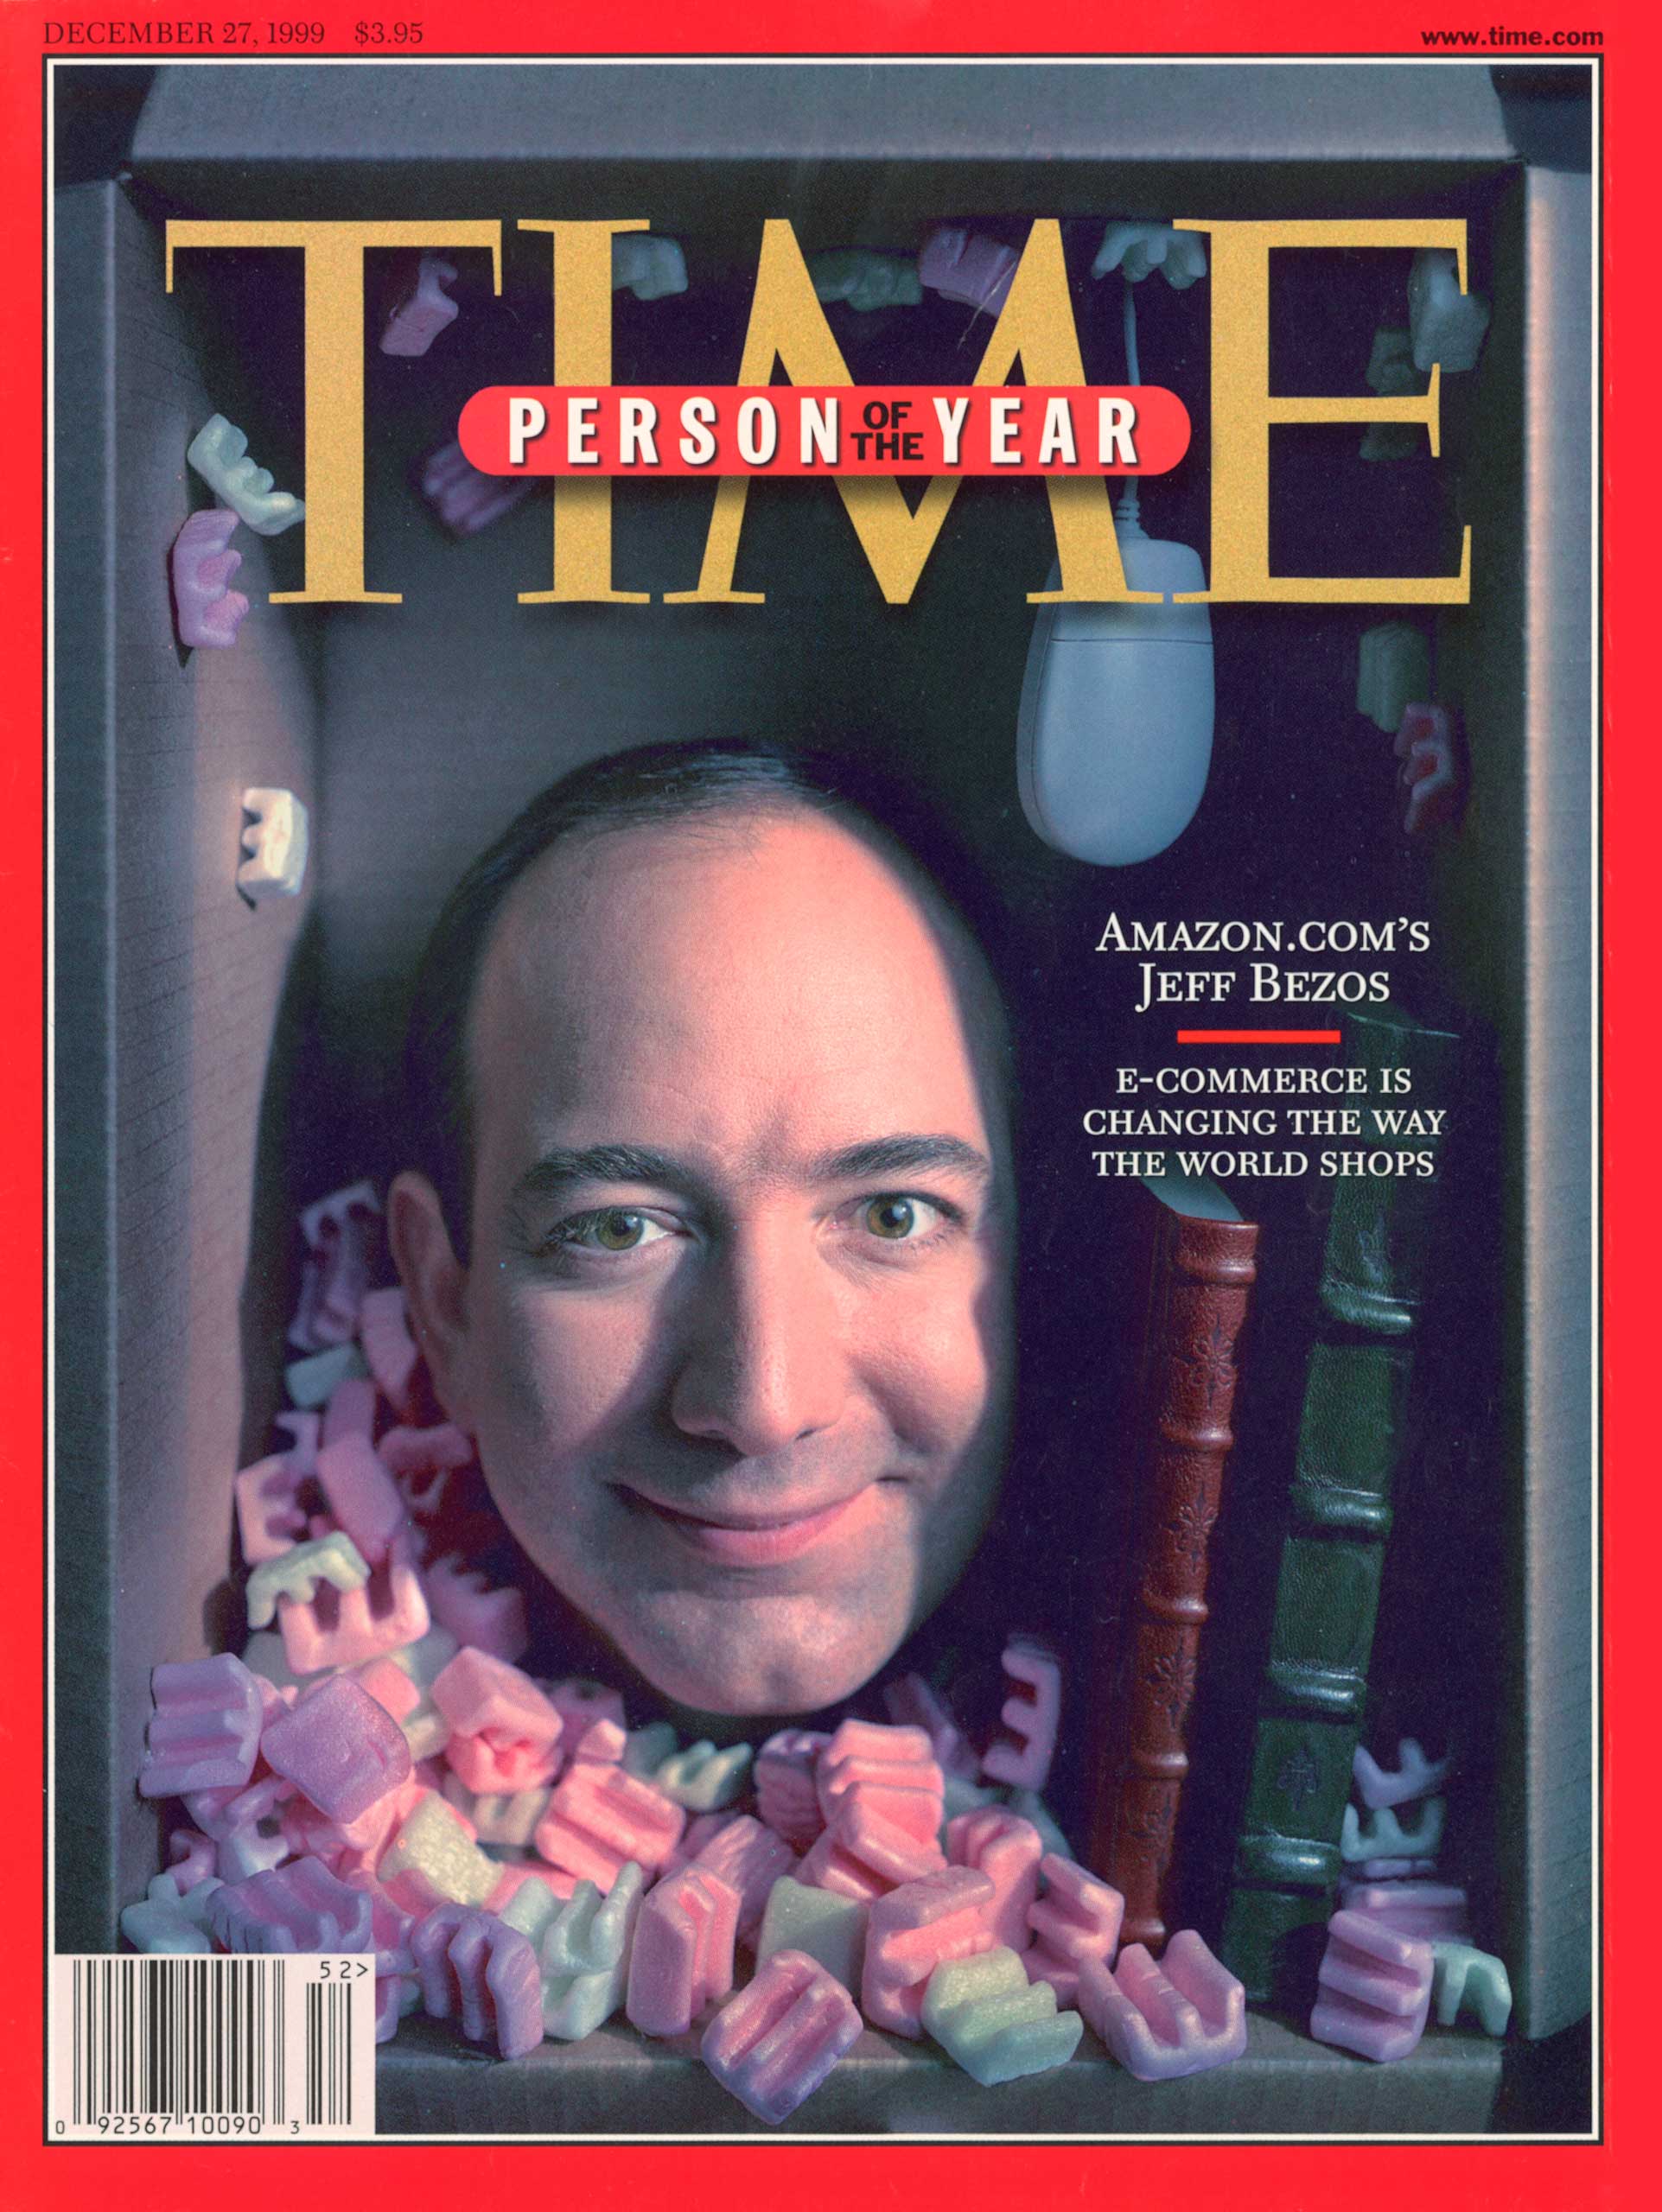 1999: Jeff Bezos